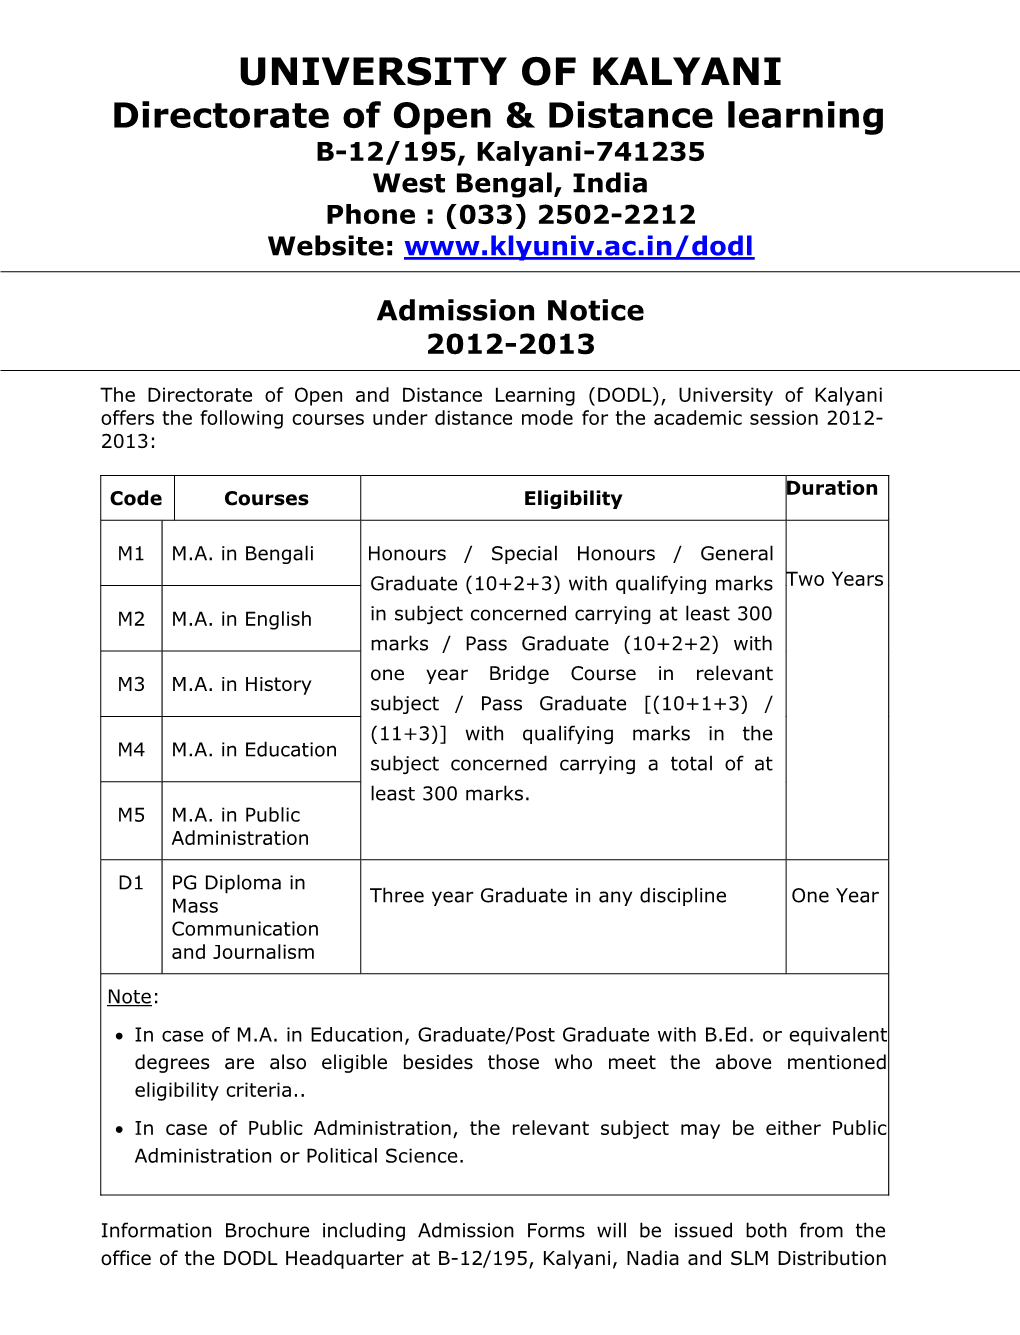 UNIVERSITY of KALYANI Directorate of Open & Distance Learning B-12/195, Kalyani-741235 West Bengal, India Phone : (033) 2502-2212 Website